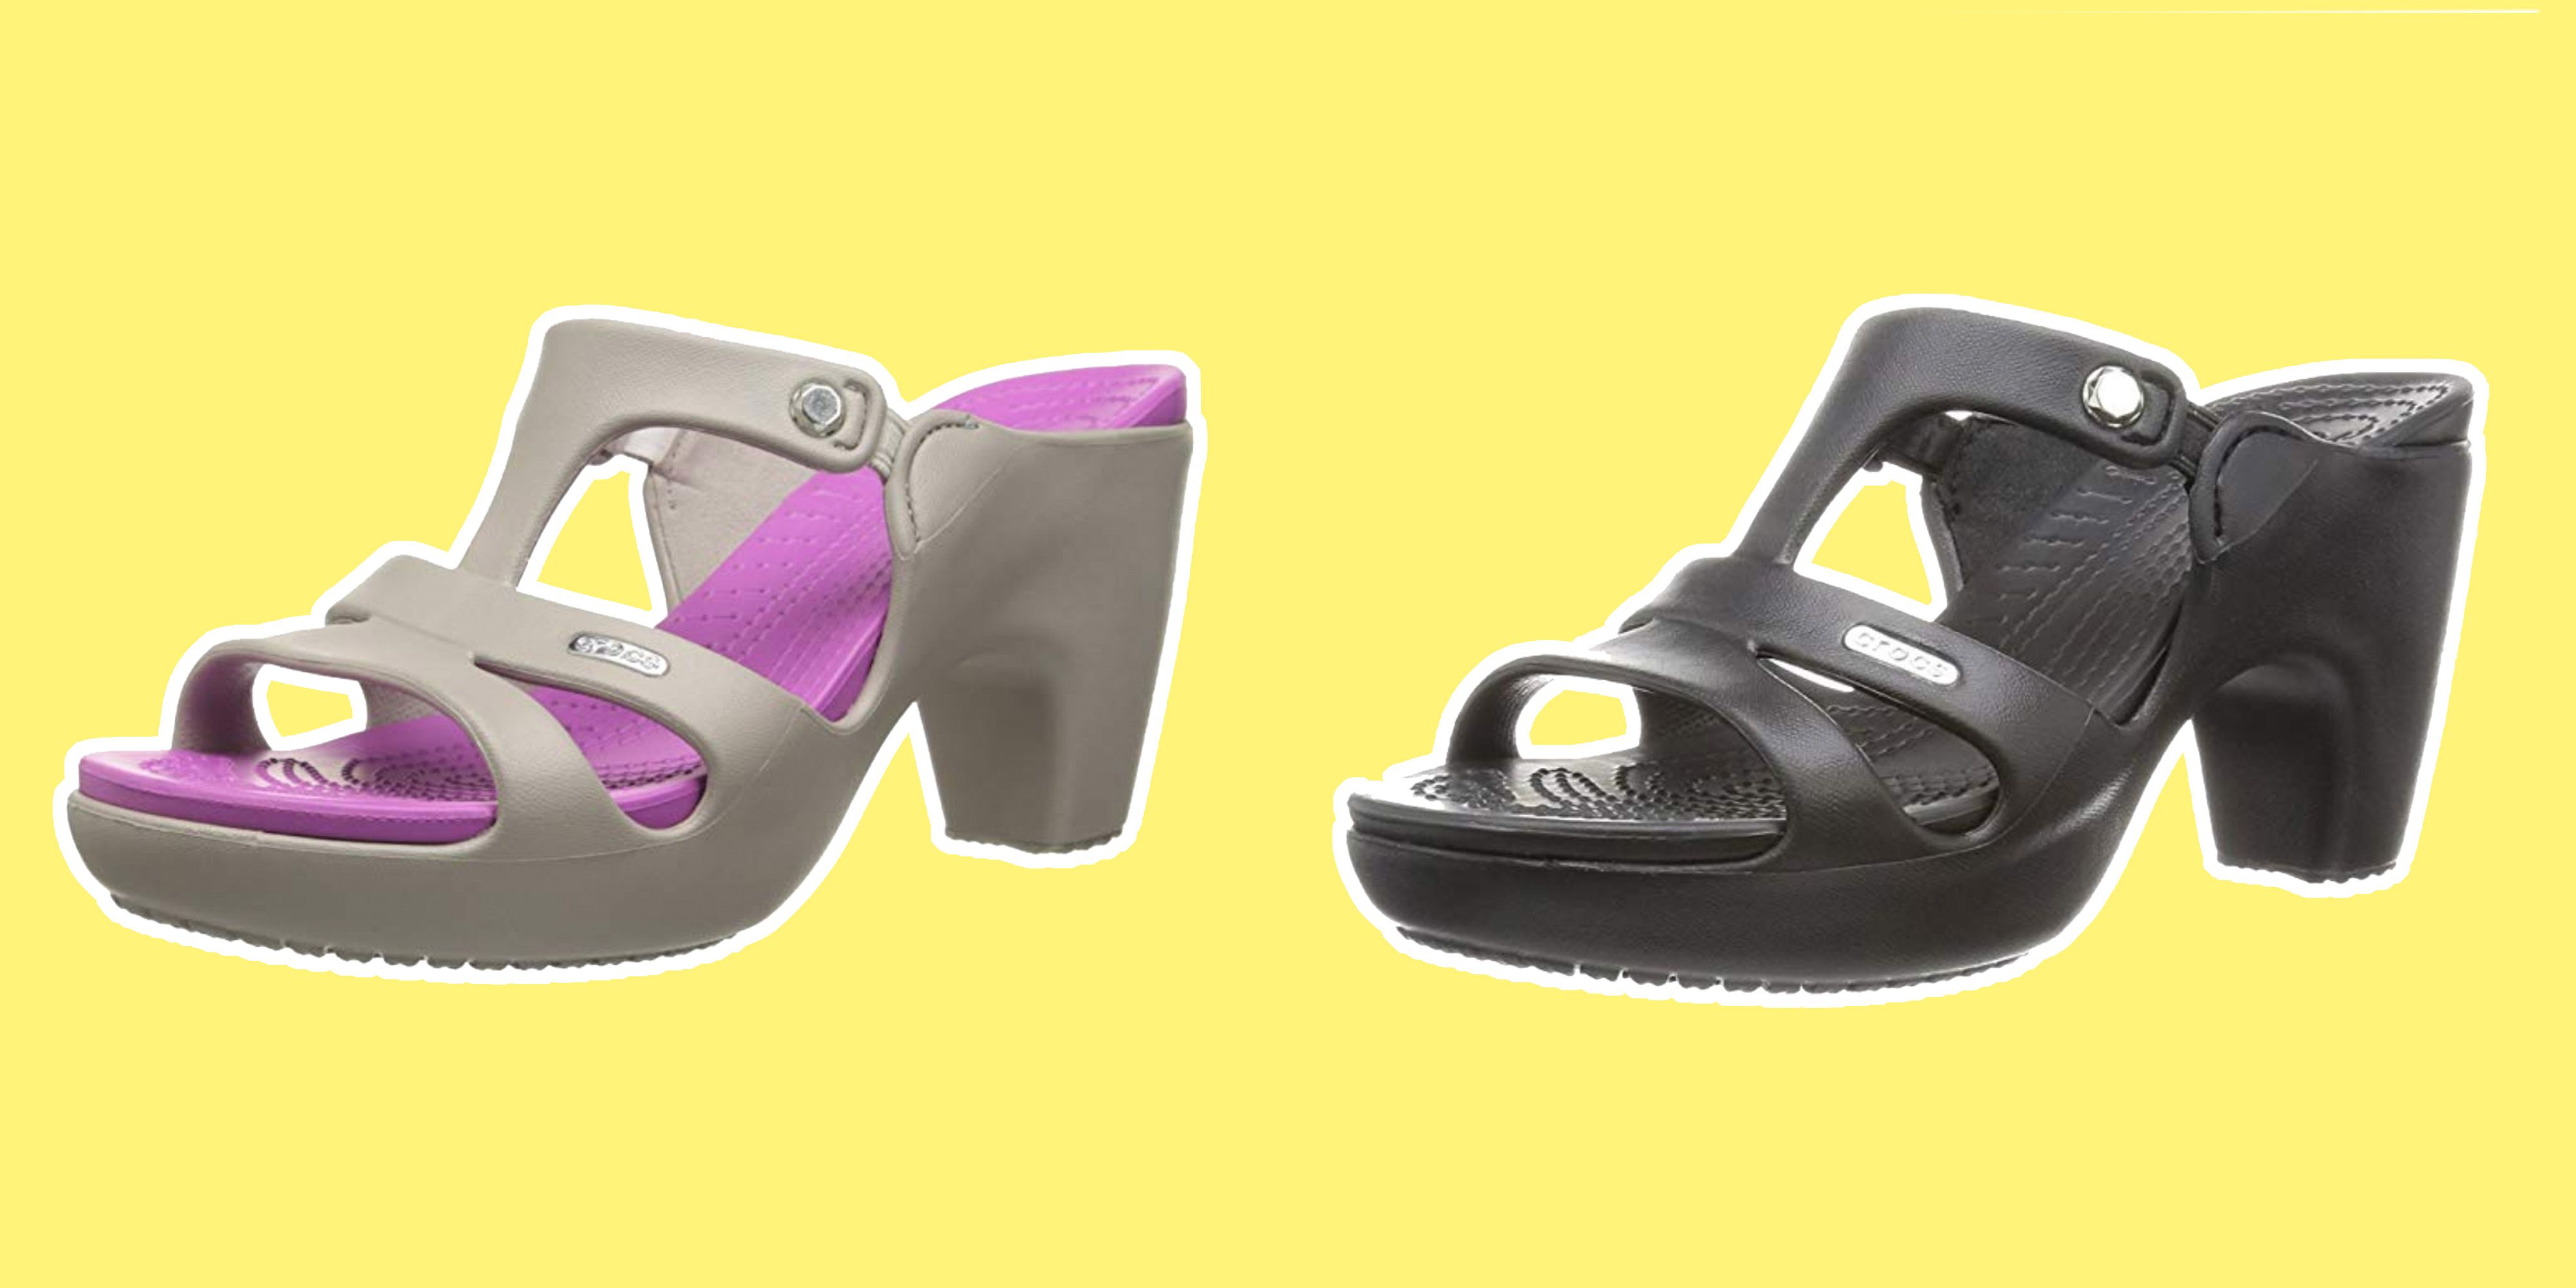 crocs women's cyprus v heel sandal